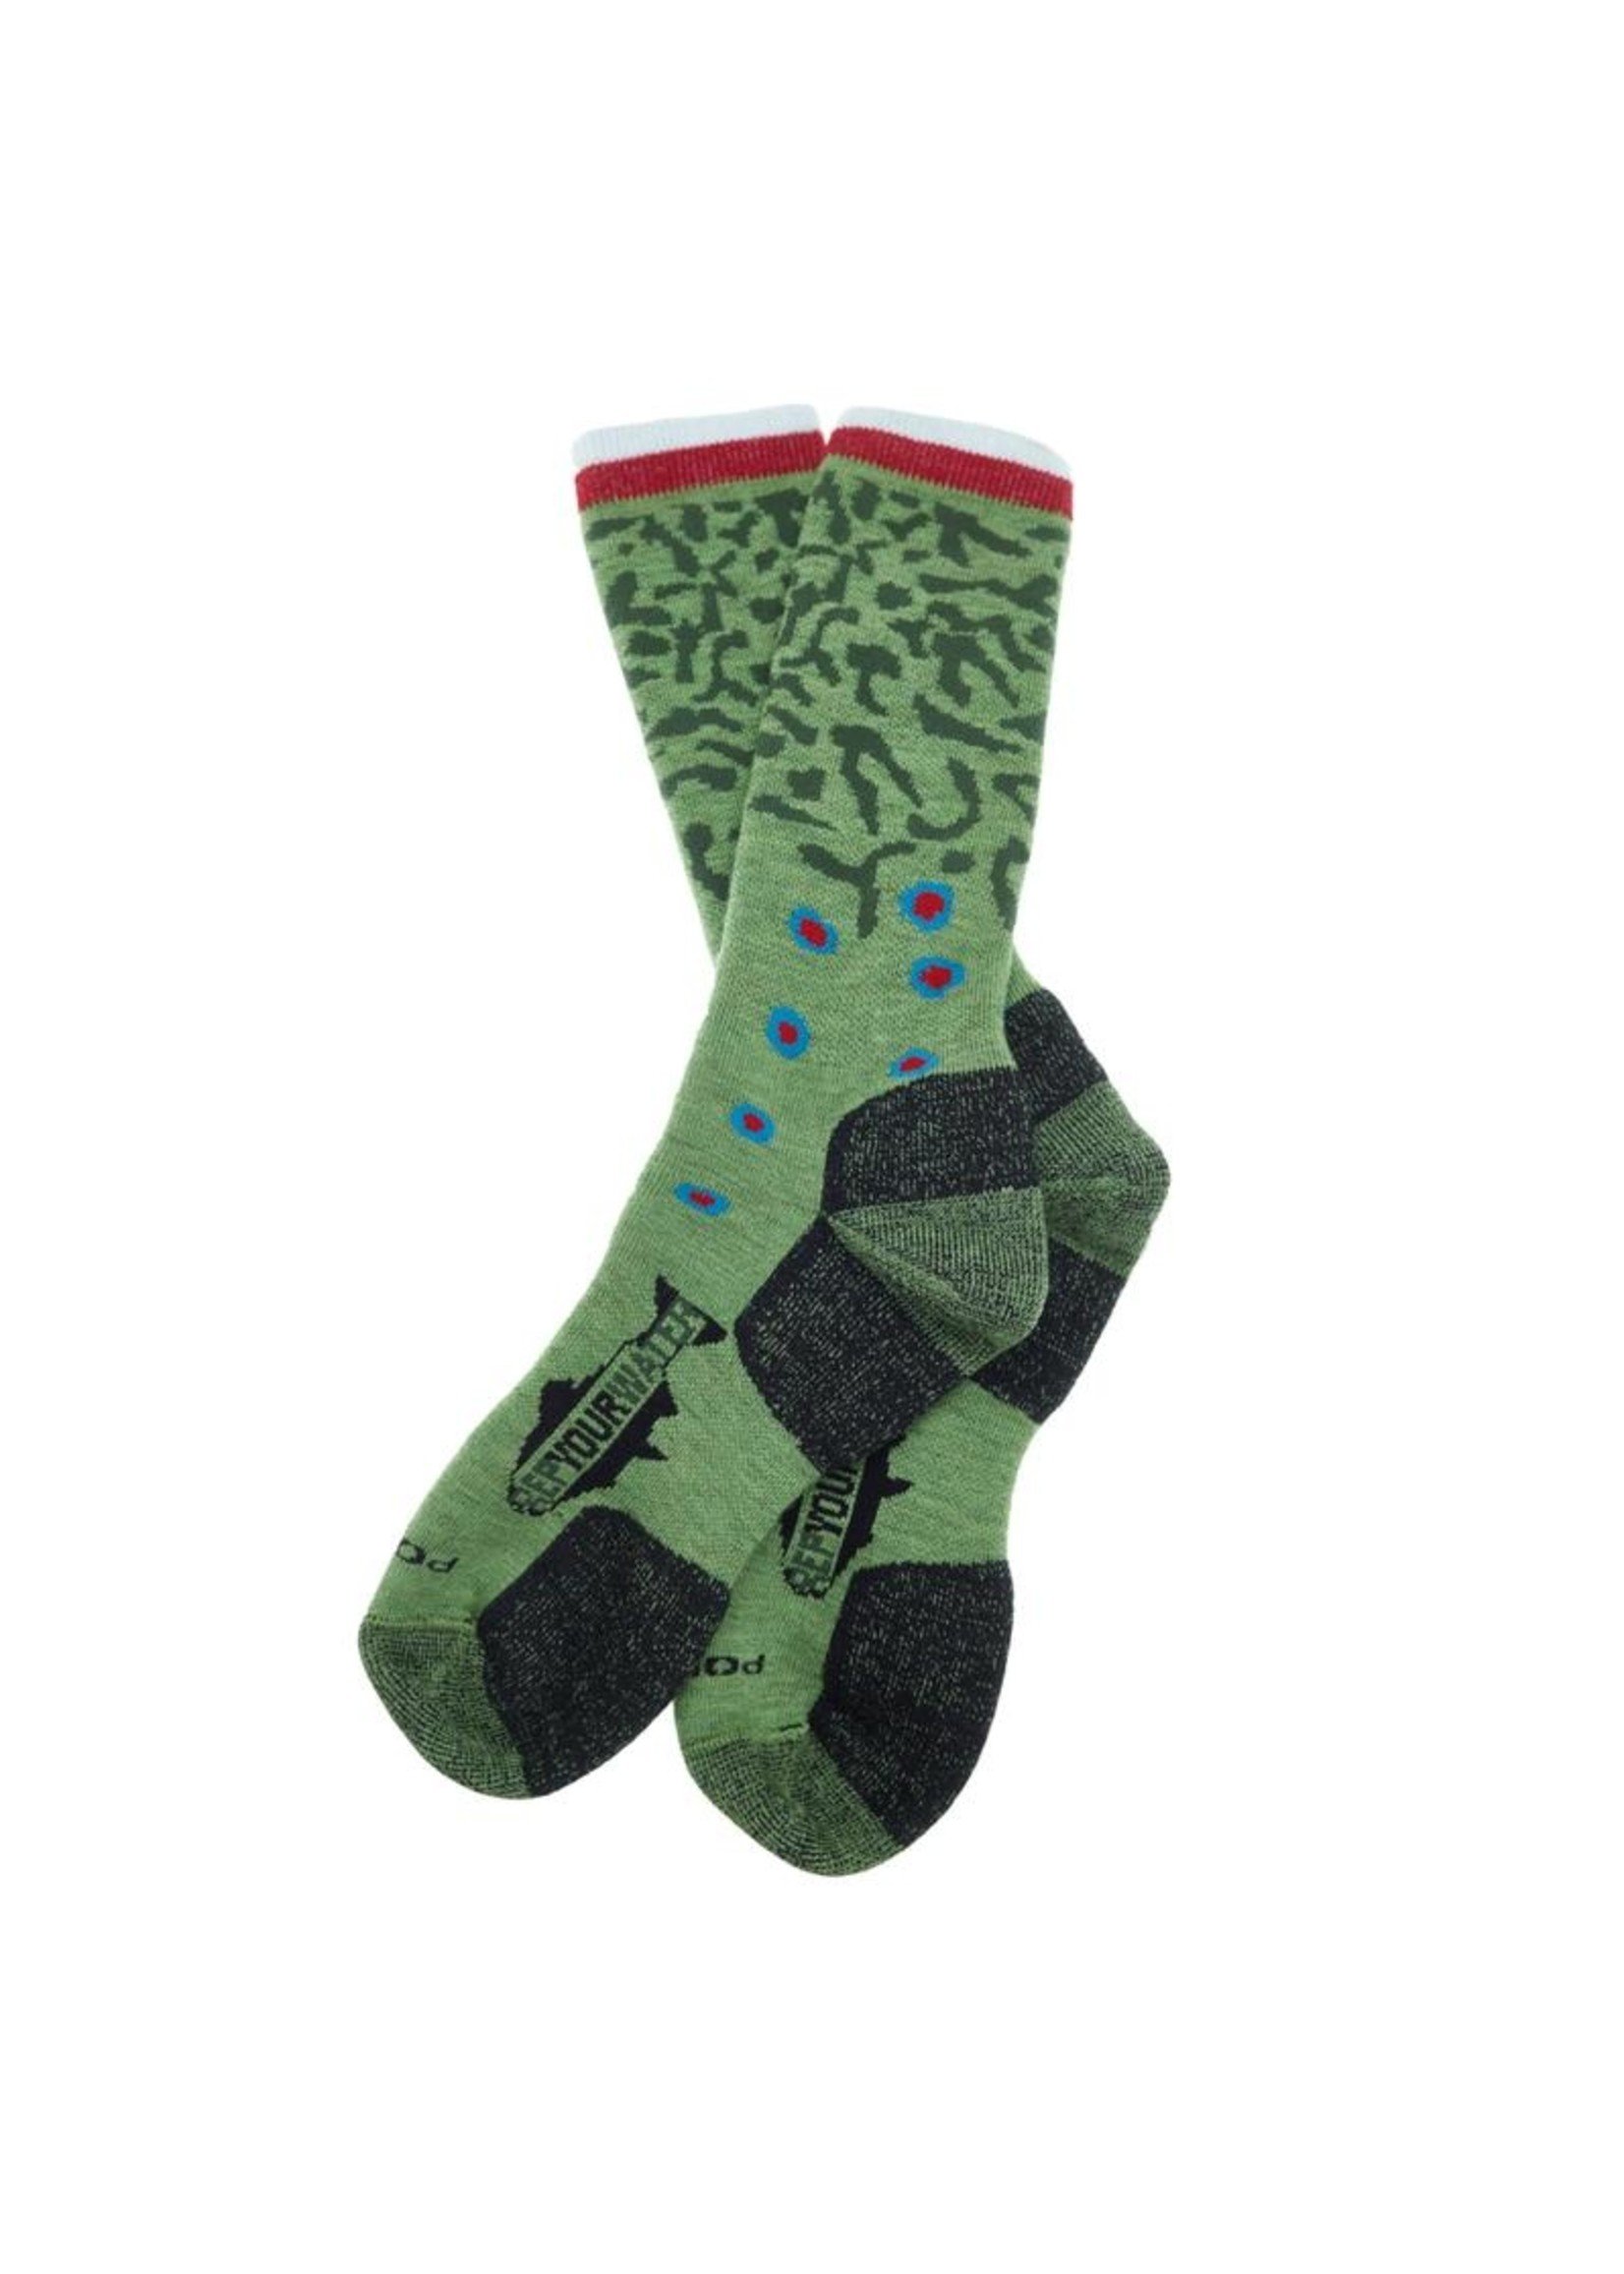 Trout Socks